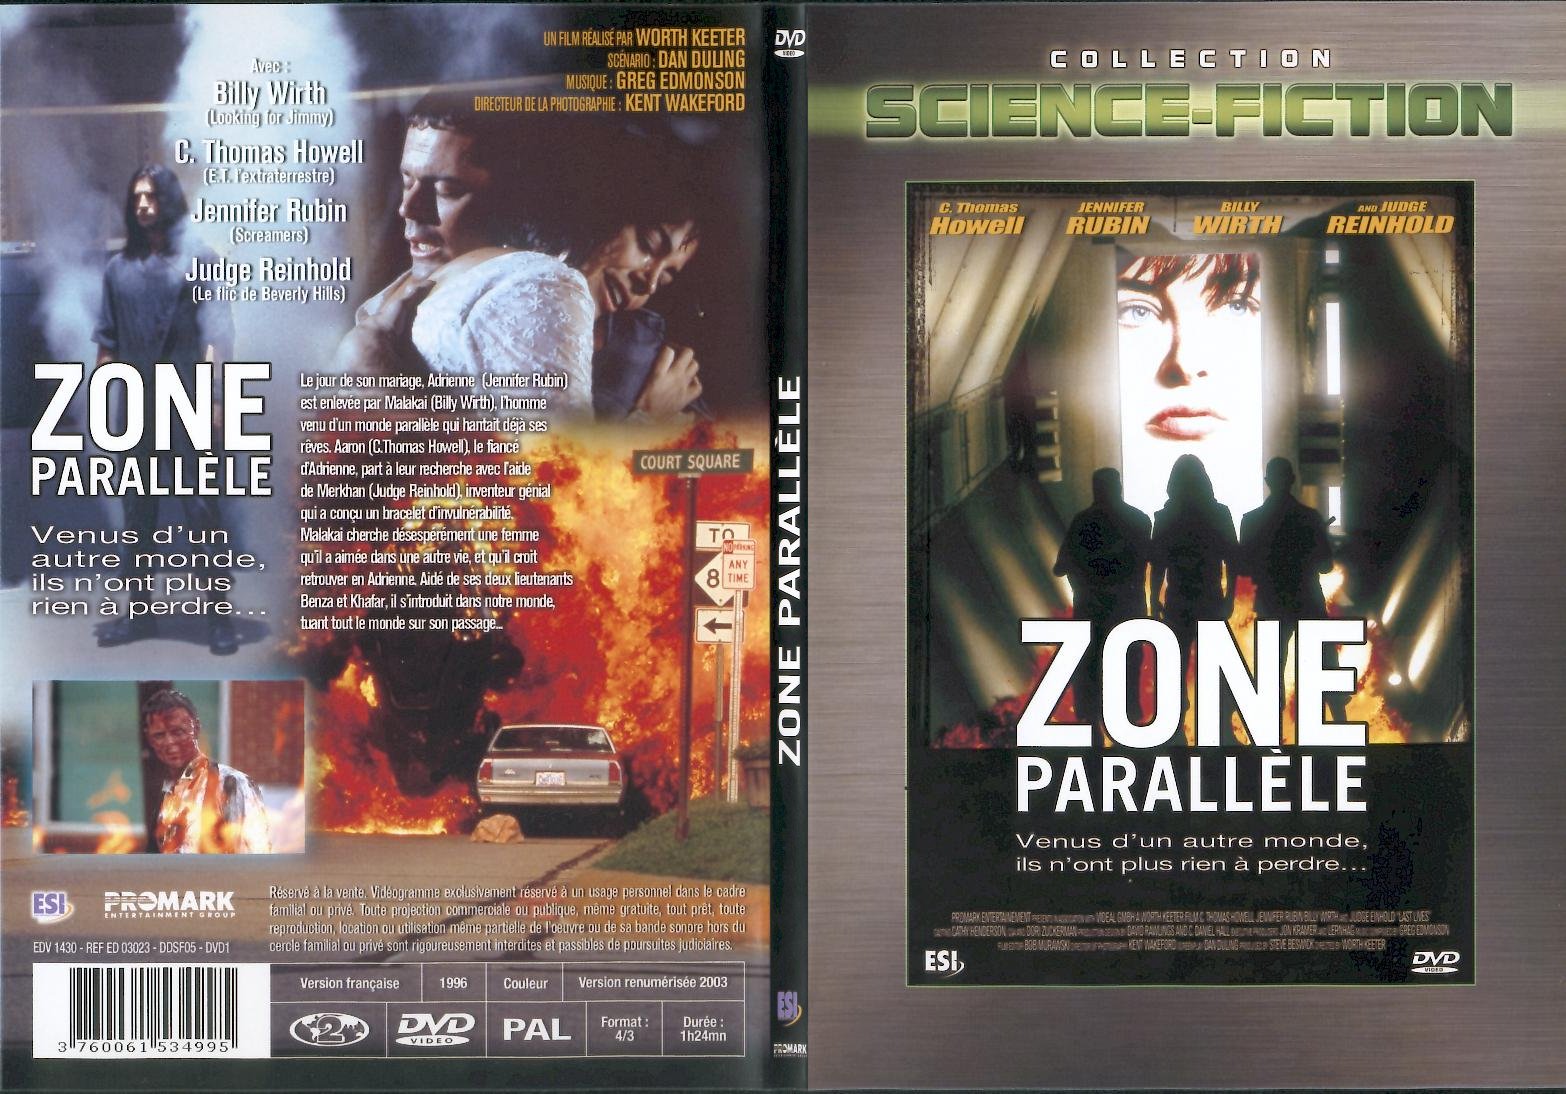 Jaquette DVD Zone parallele - SLIM